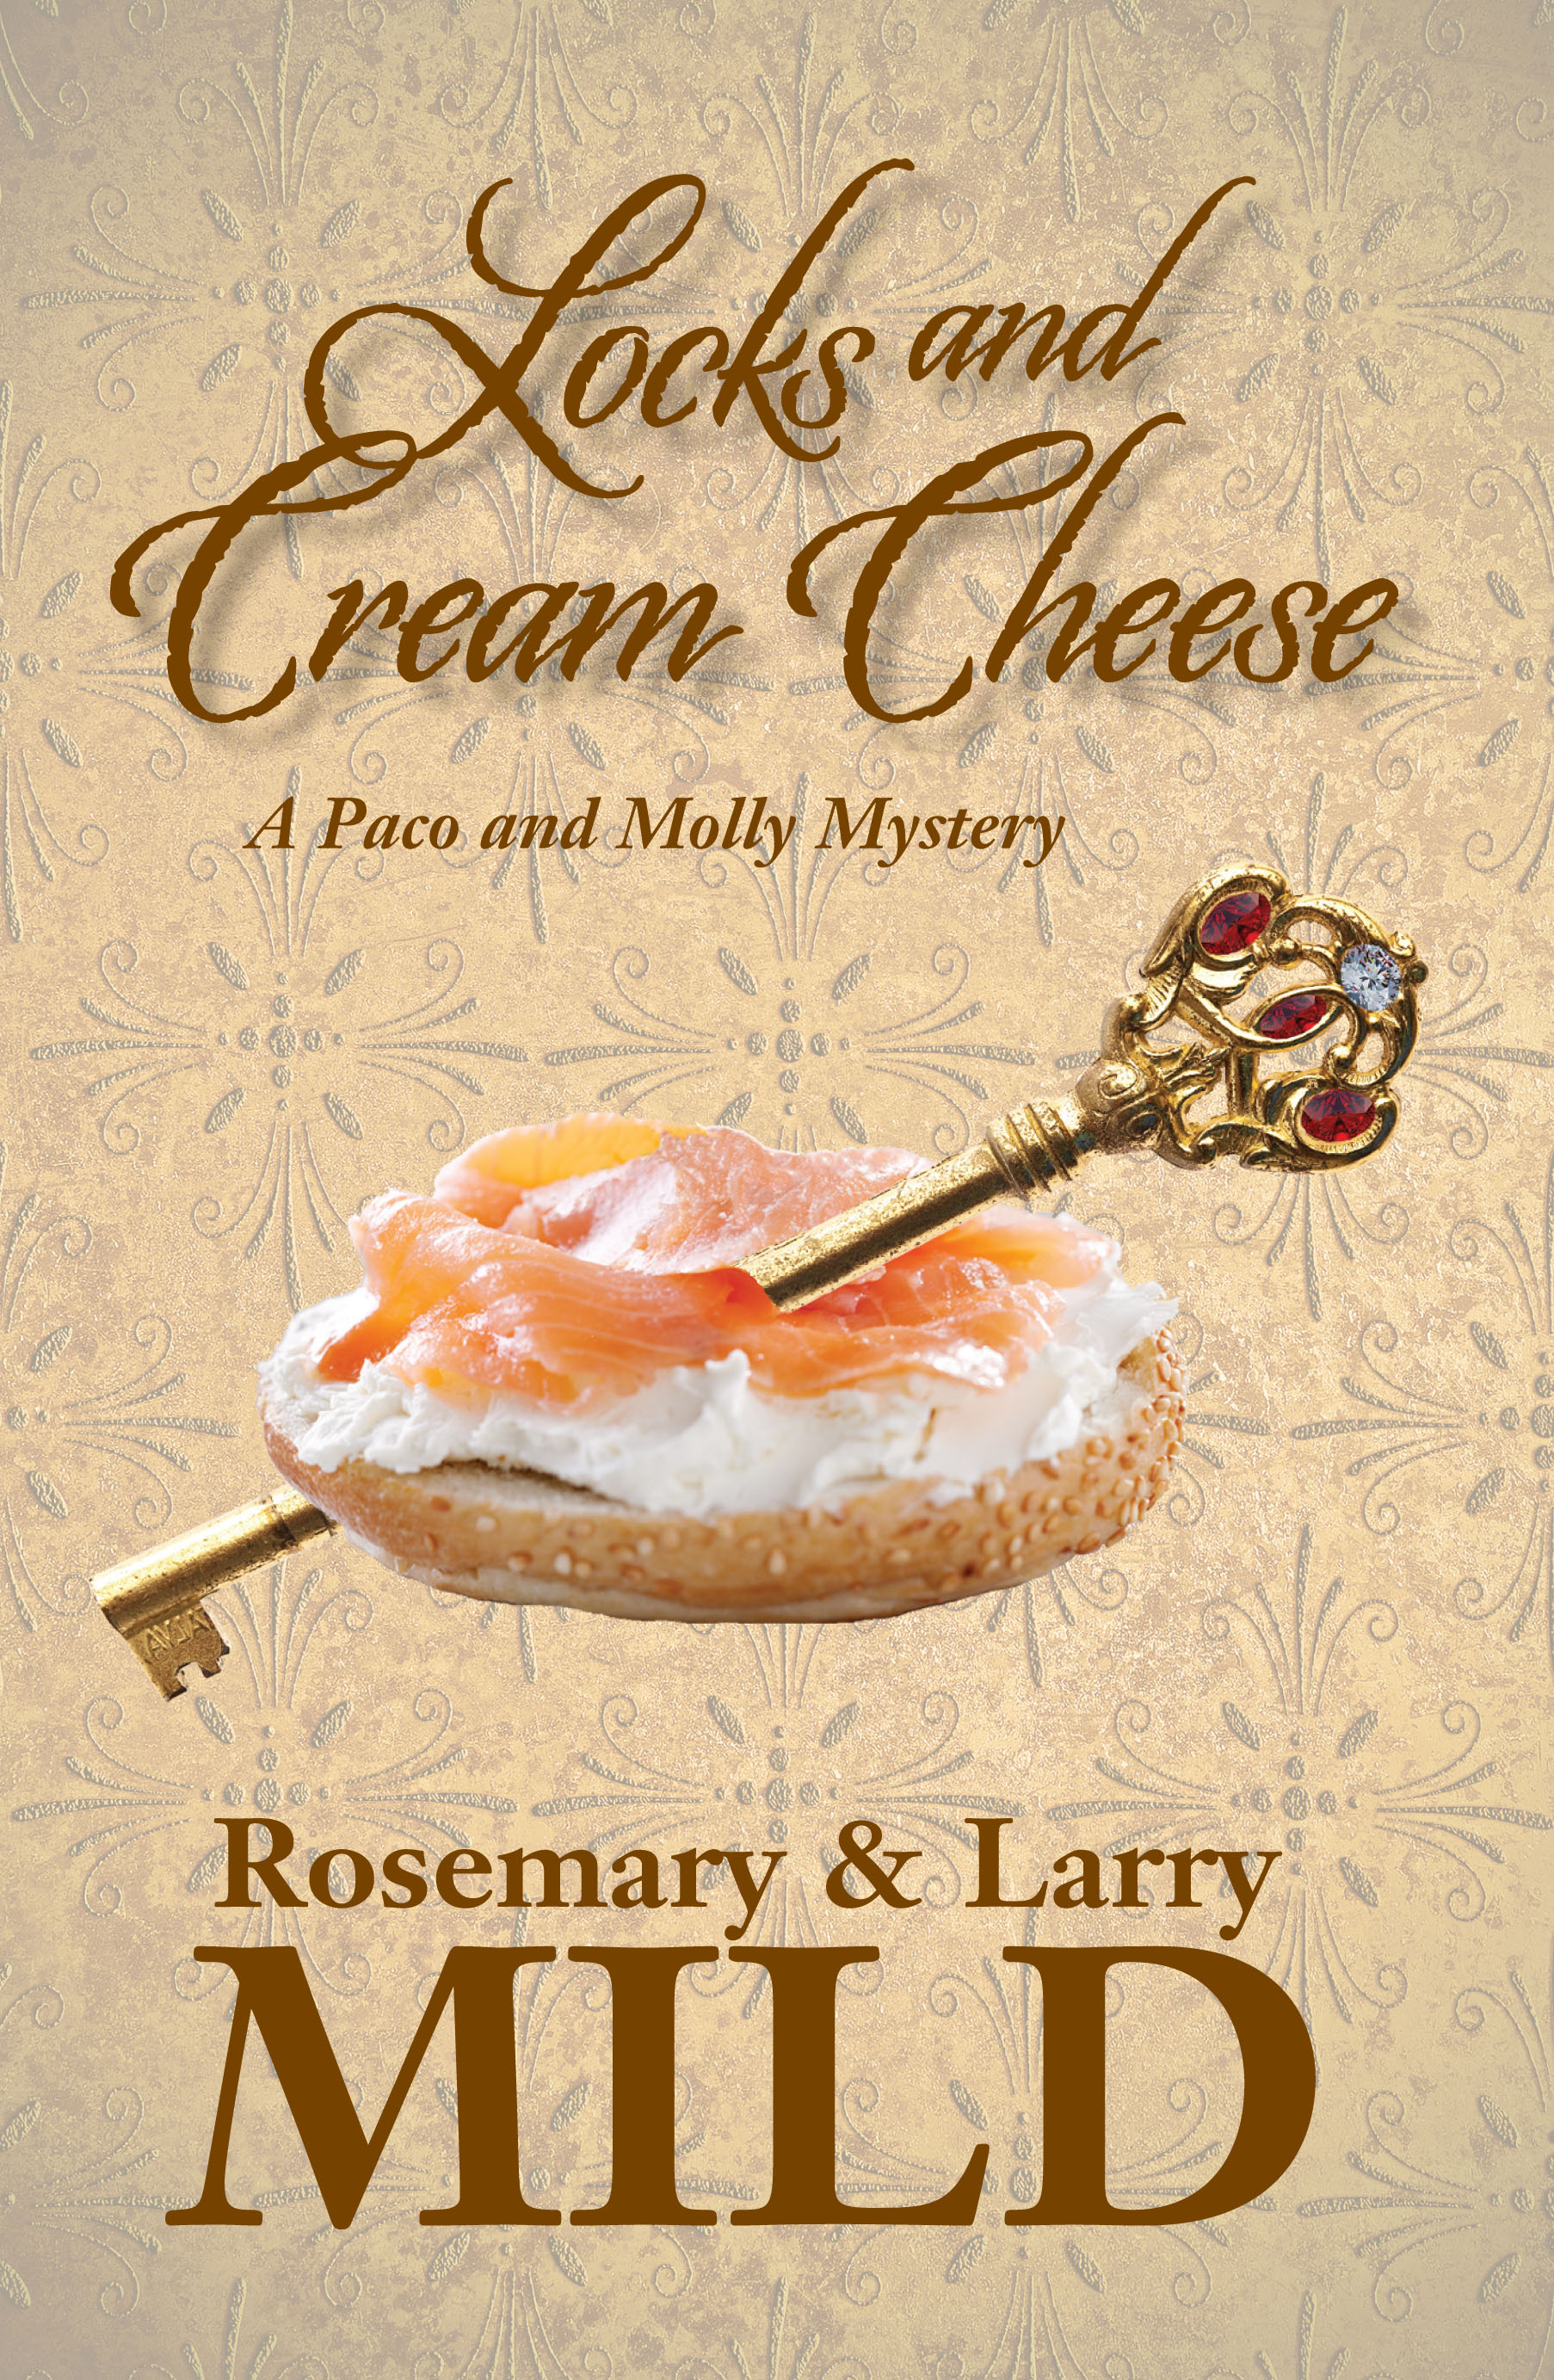 Locks and Cream Cheese by Larry & Rosemary Mild